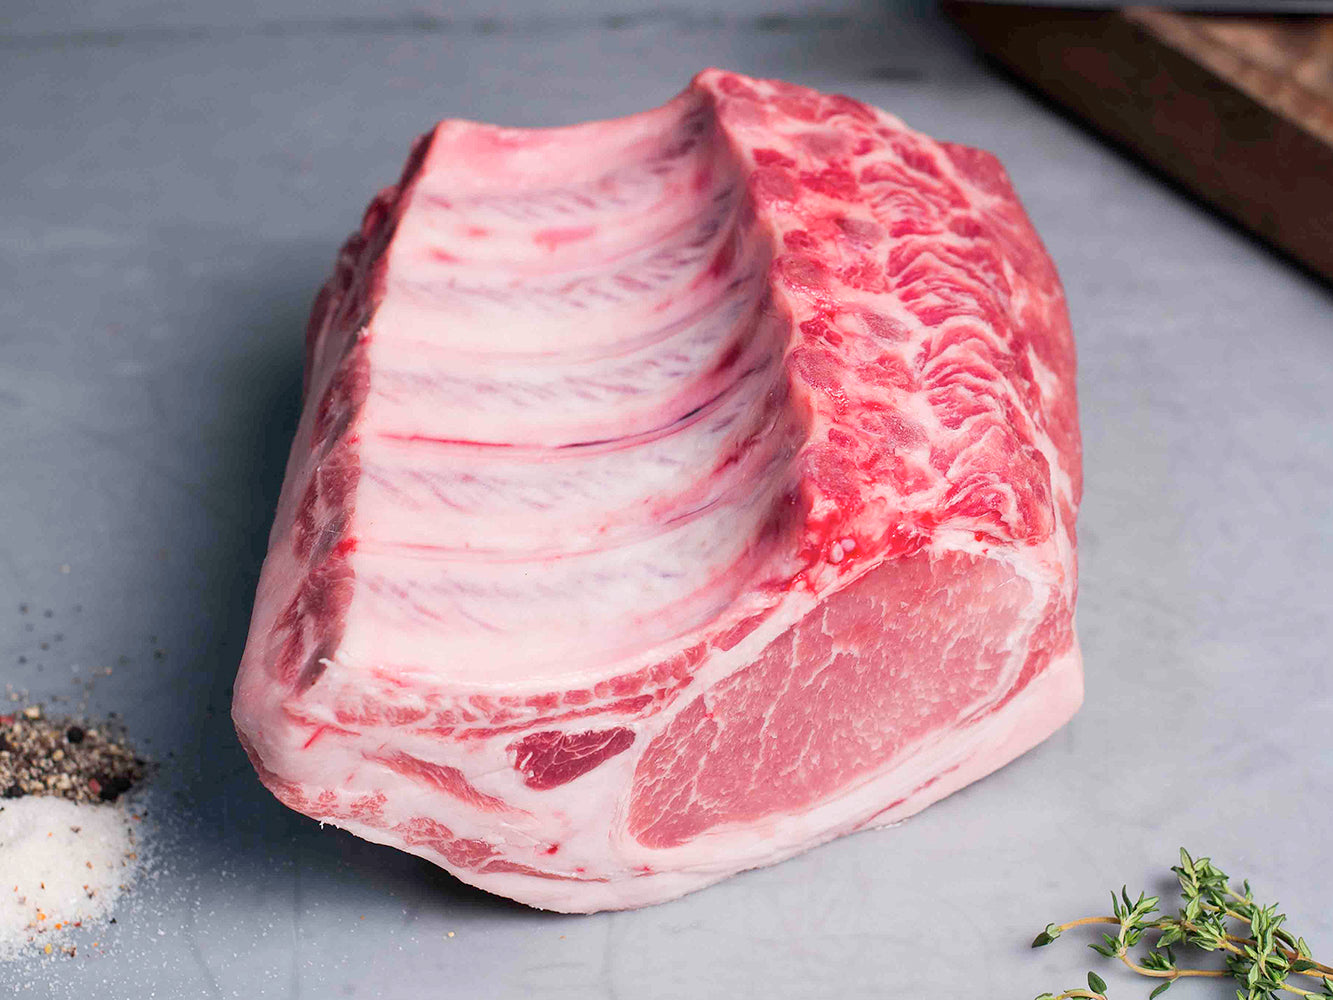 Pork King - Premium Pork and Pork Products